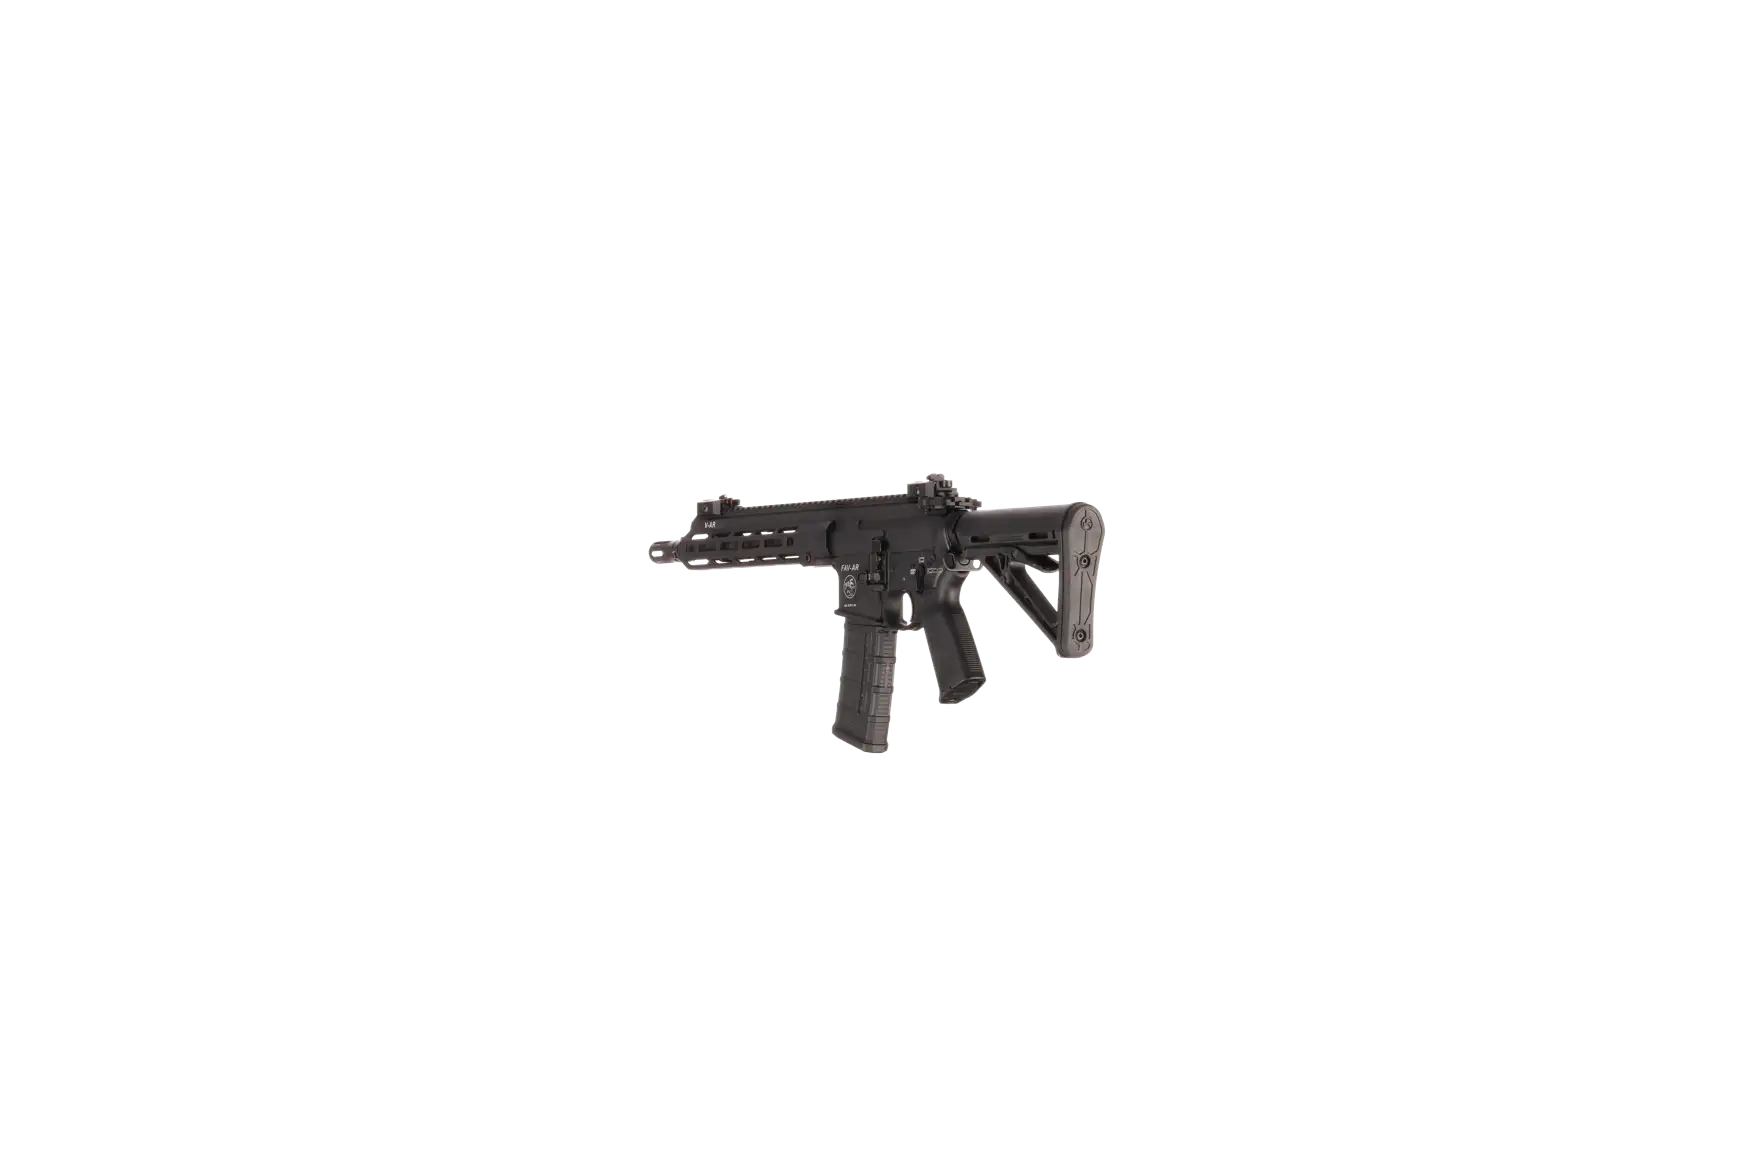 Náhledový obrázek pušky V-AR 556 x 45mm SPINVIEW 1 R48